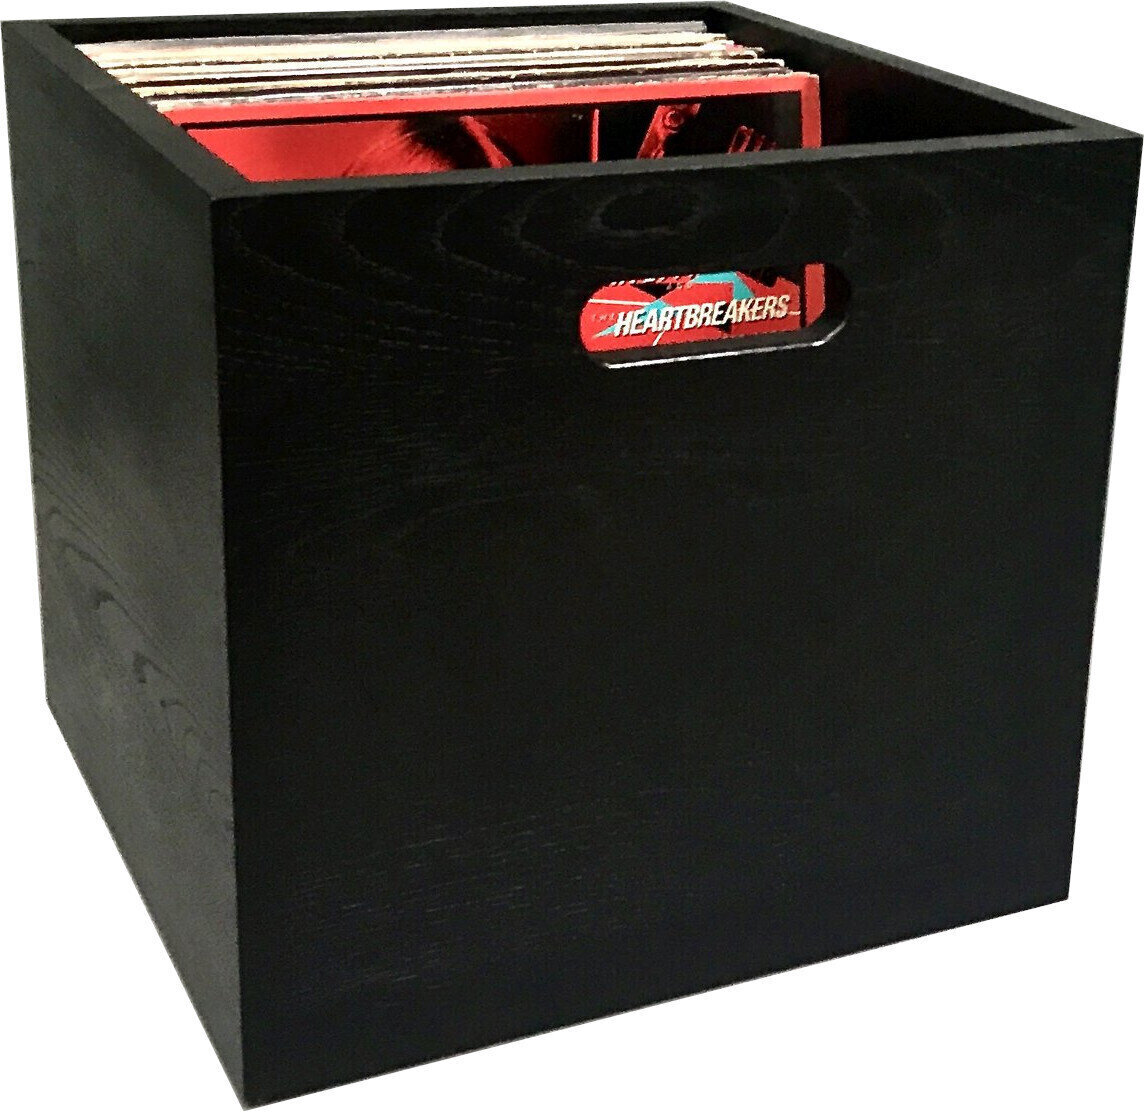 Vinyl Record Box Music Box Designs 7 inch Vinyl Storage Box- ‘Singles Going Steady' Black Magic